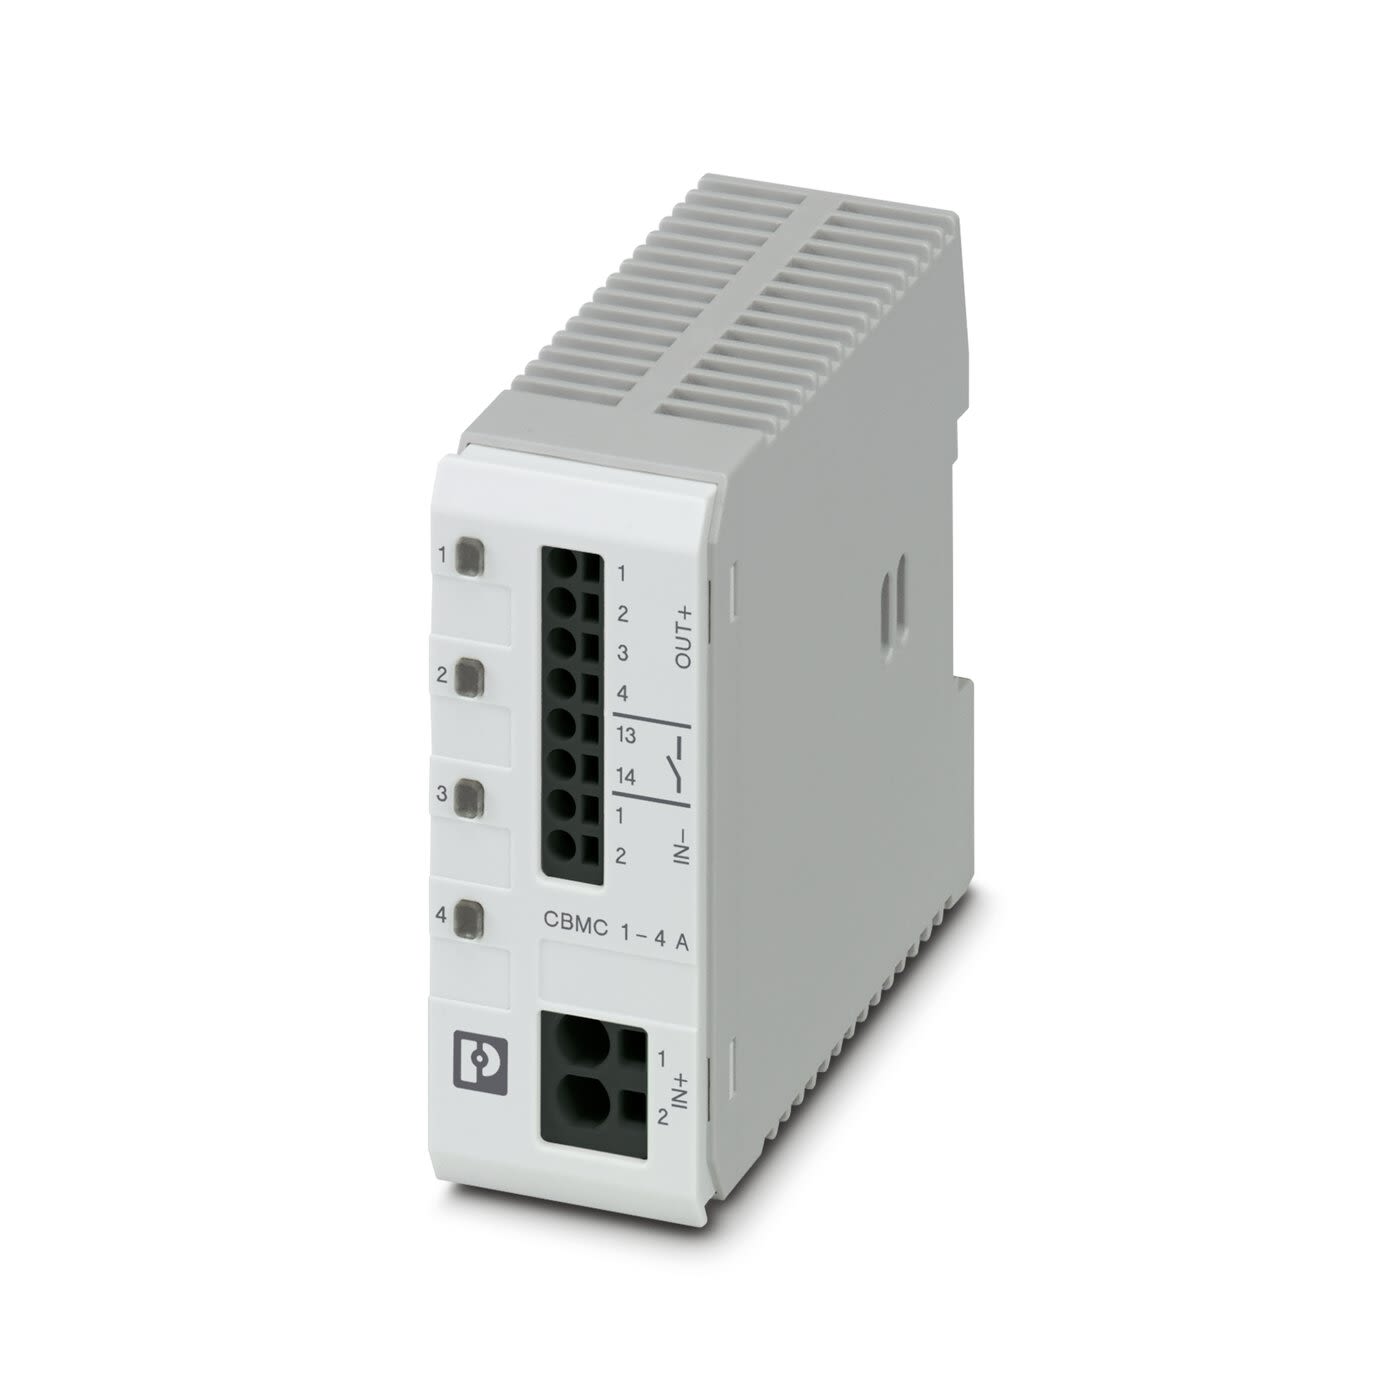 Phoenix Contact 2906032, 10A, DIN Rail Mount 24V CBMC, 1 channels Electronic Circuit breaker